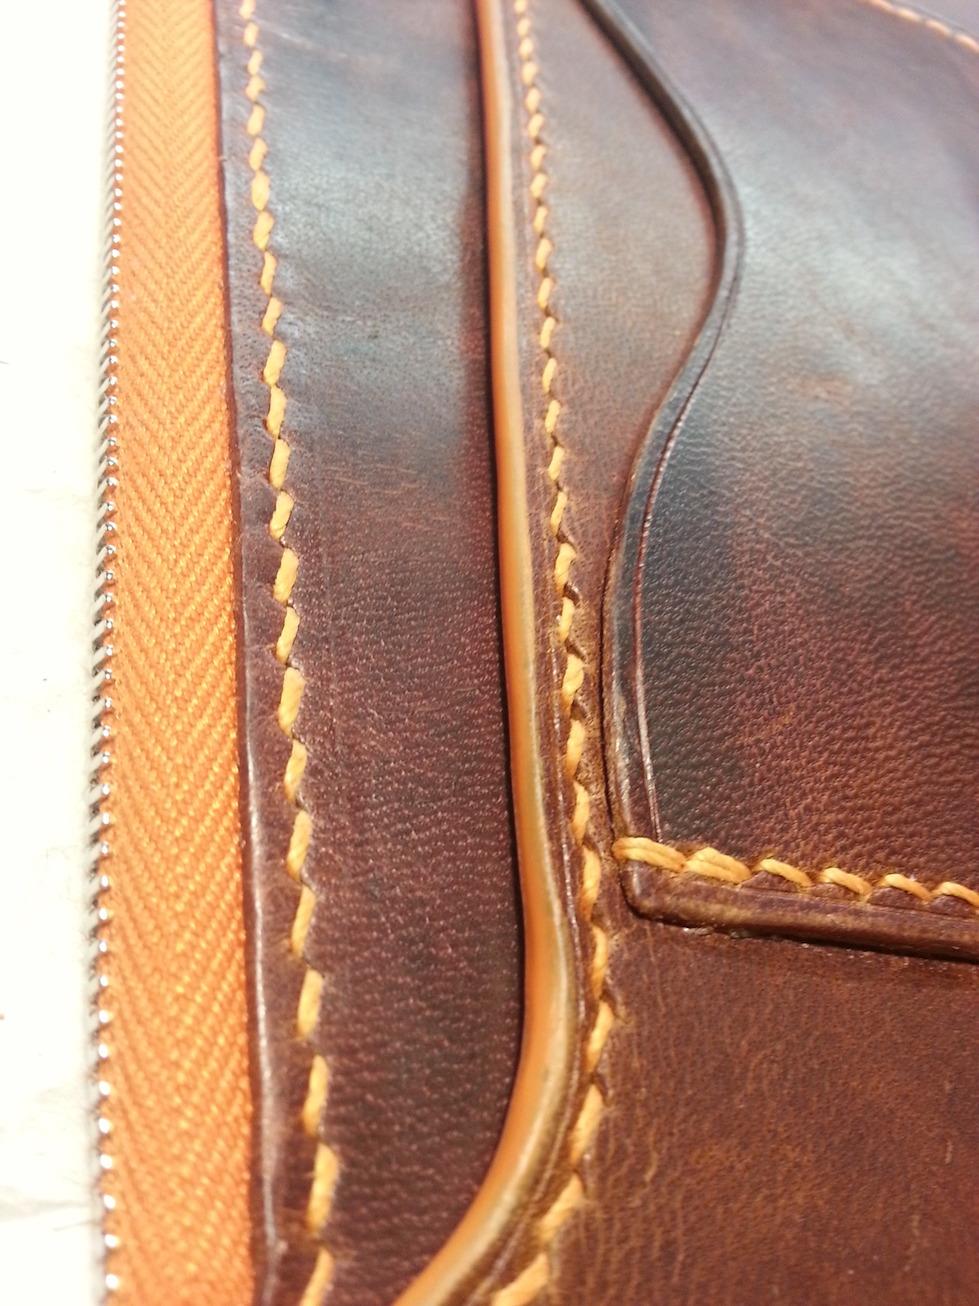 Finishing leather edges - Arts & Crafts Stack Exchange